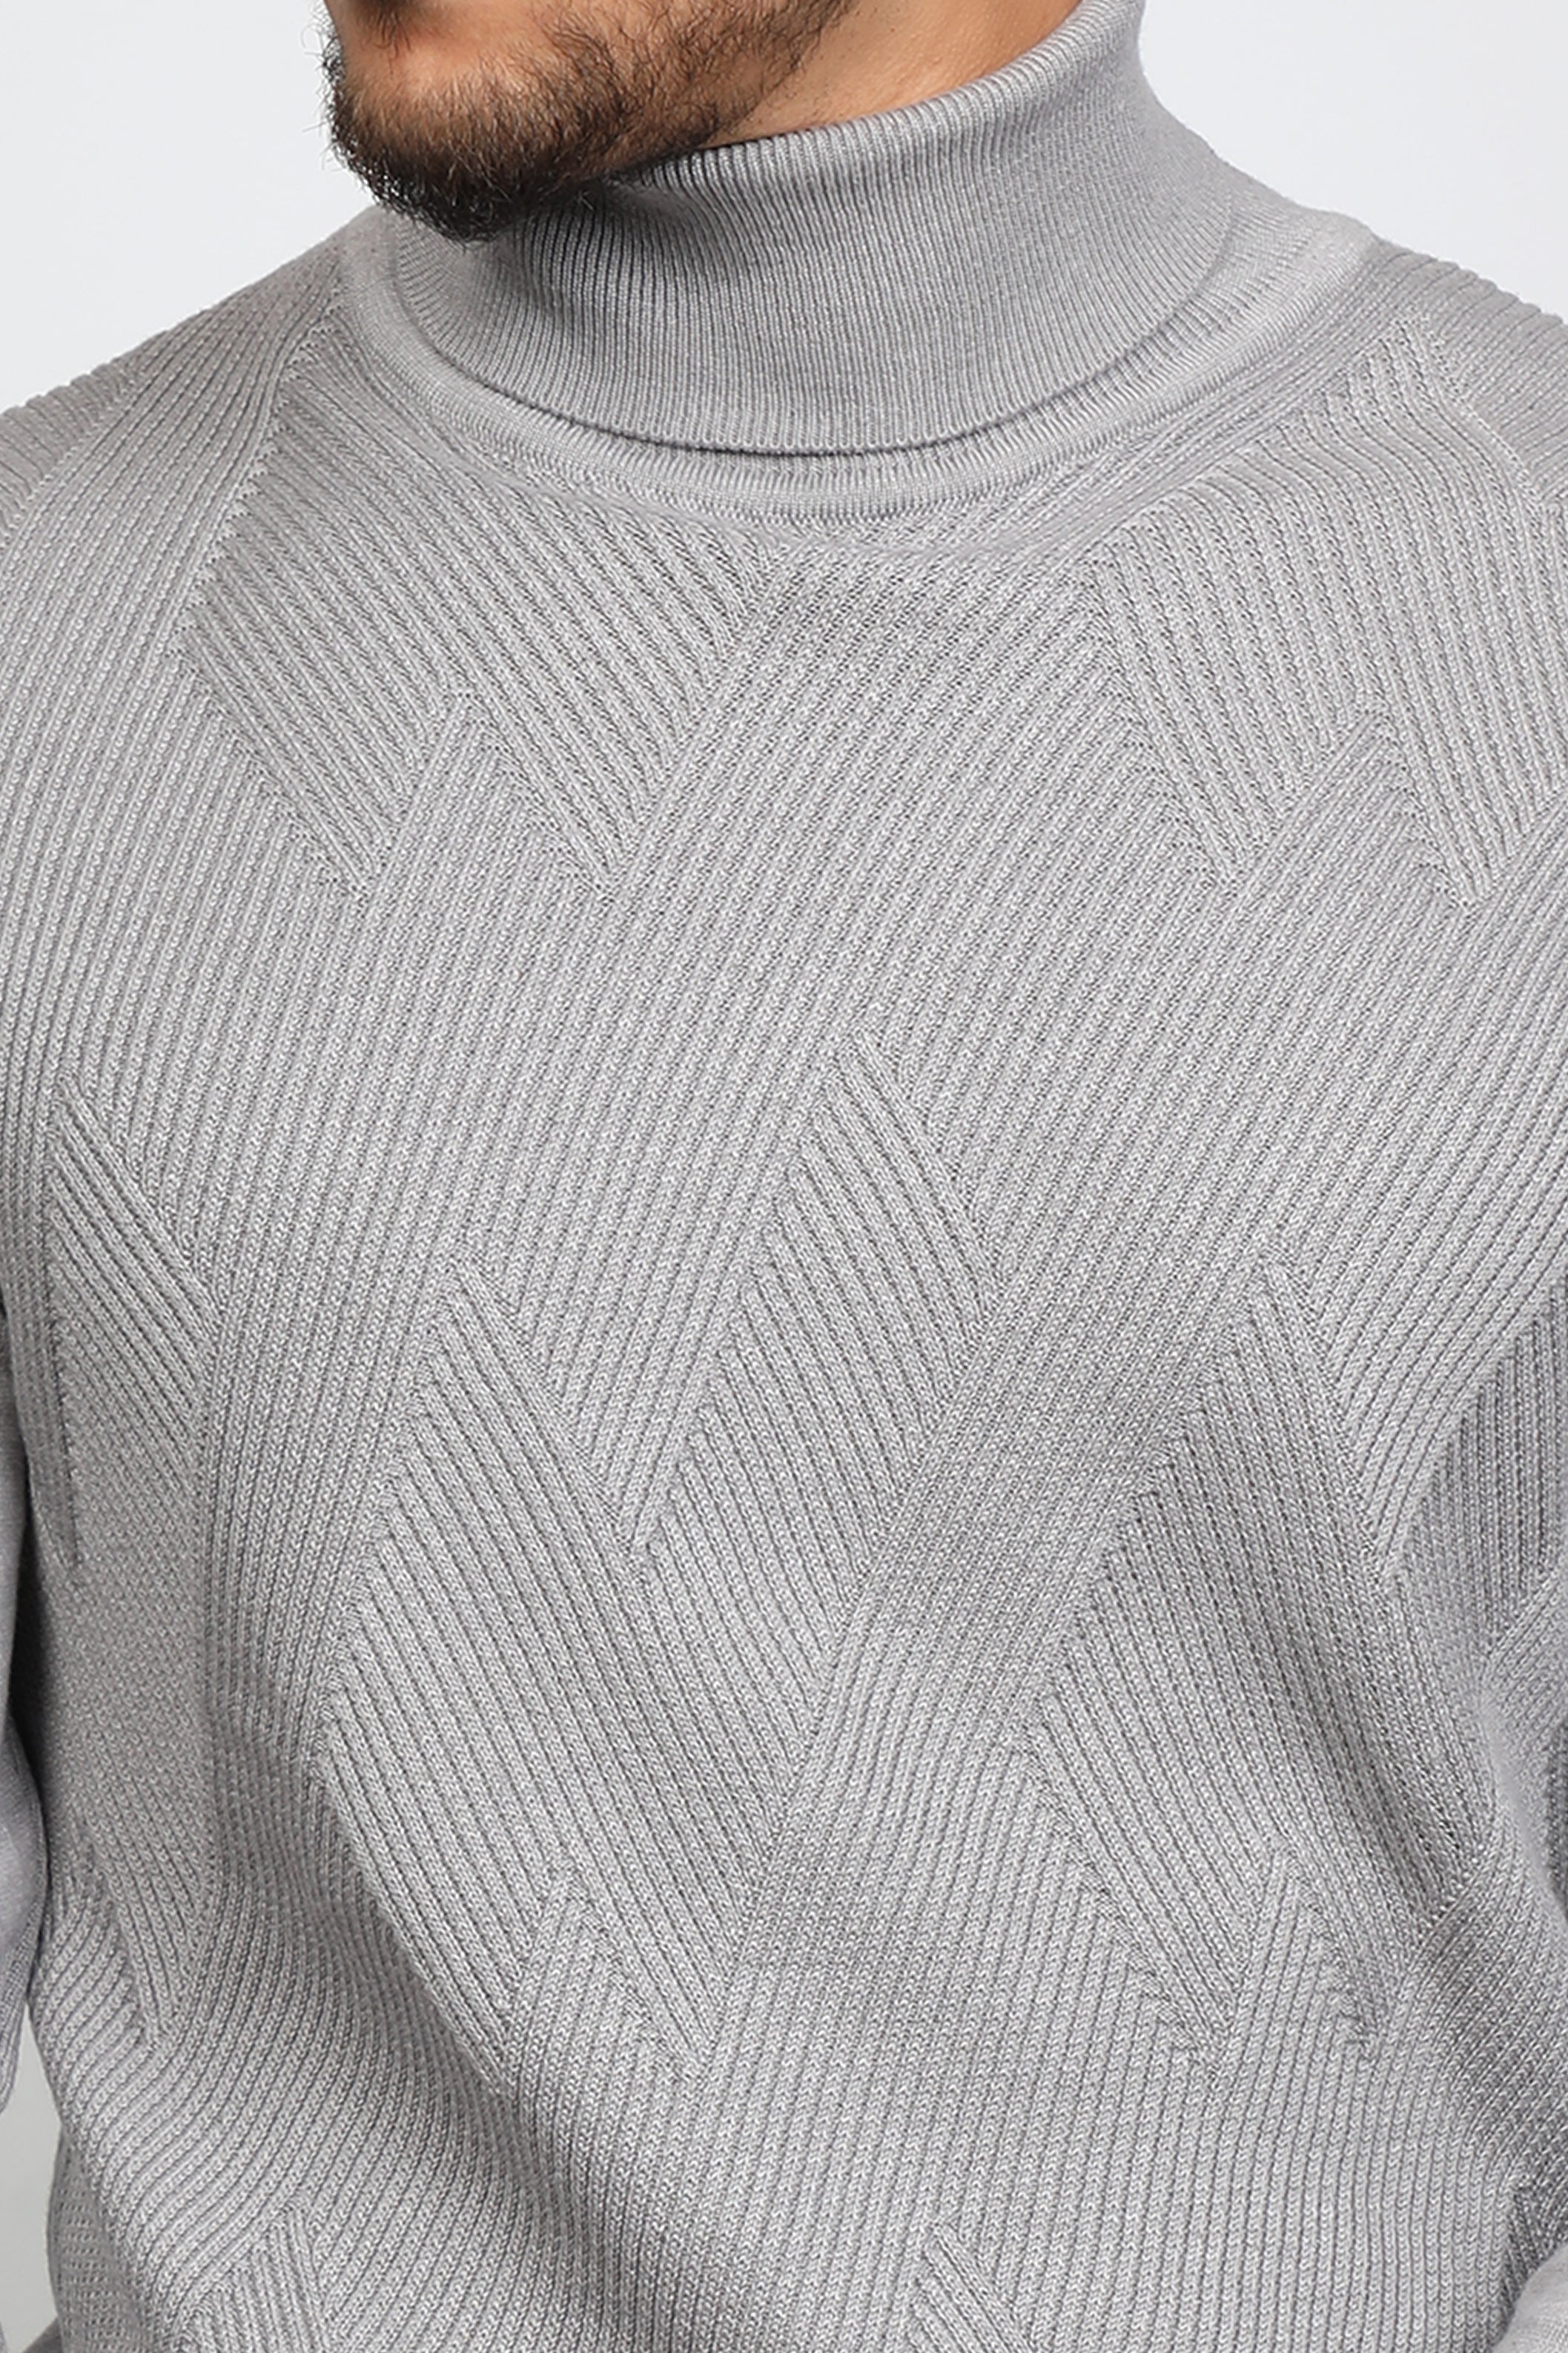 Men Classy Grey Turtle Neck Patterned Sweater